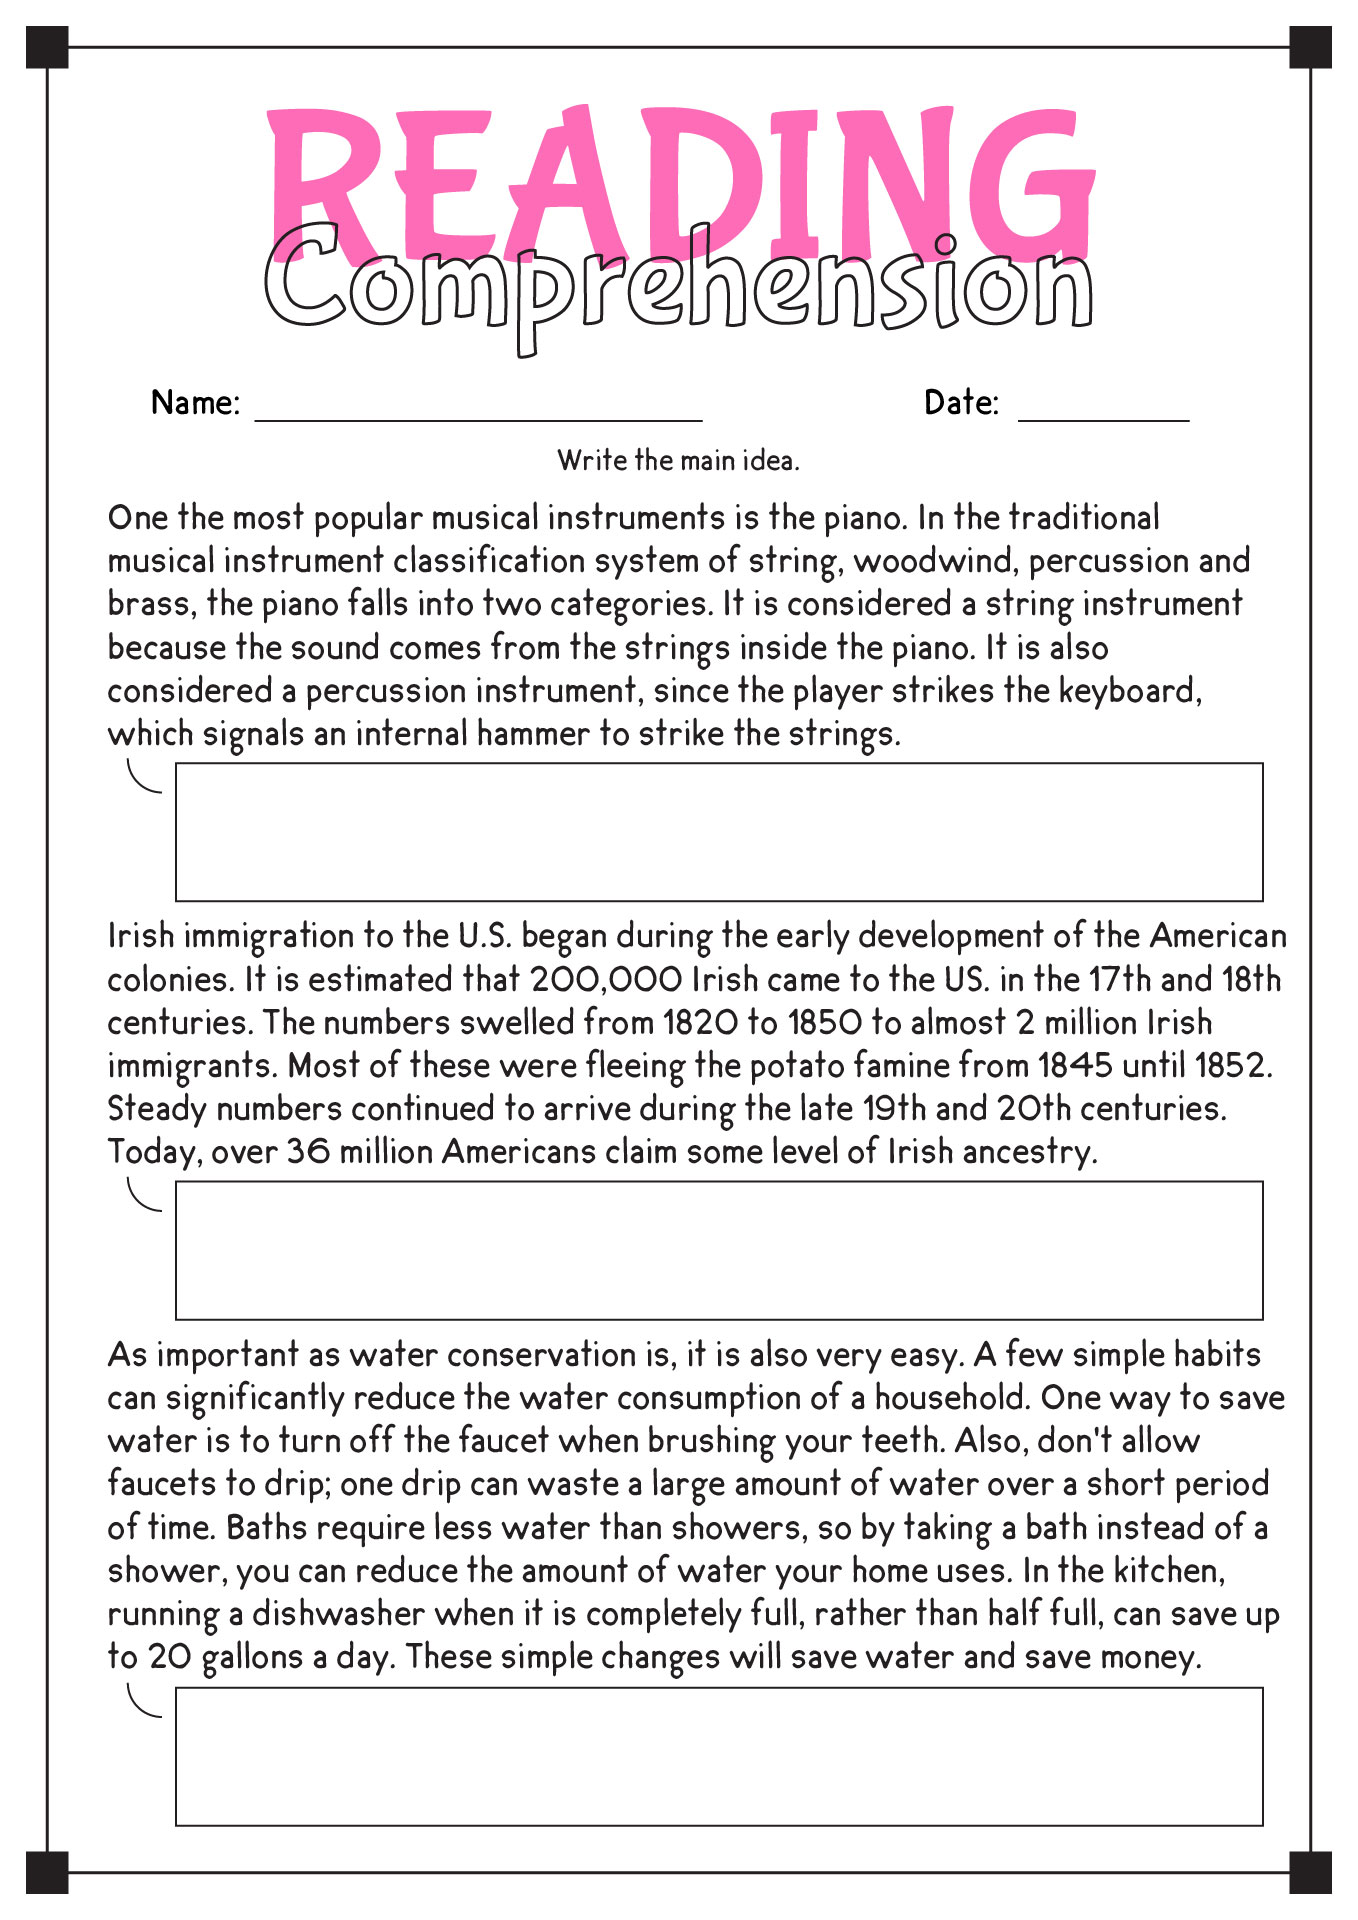 Free Reading Comprehension Worksheets High School Image